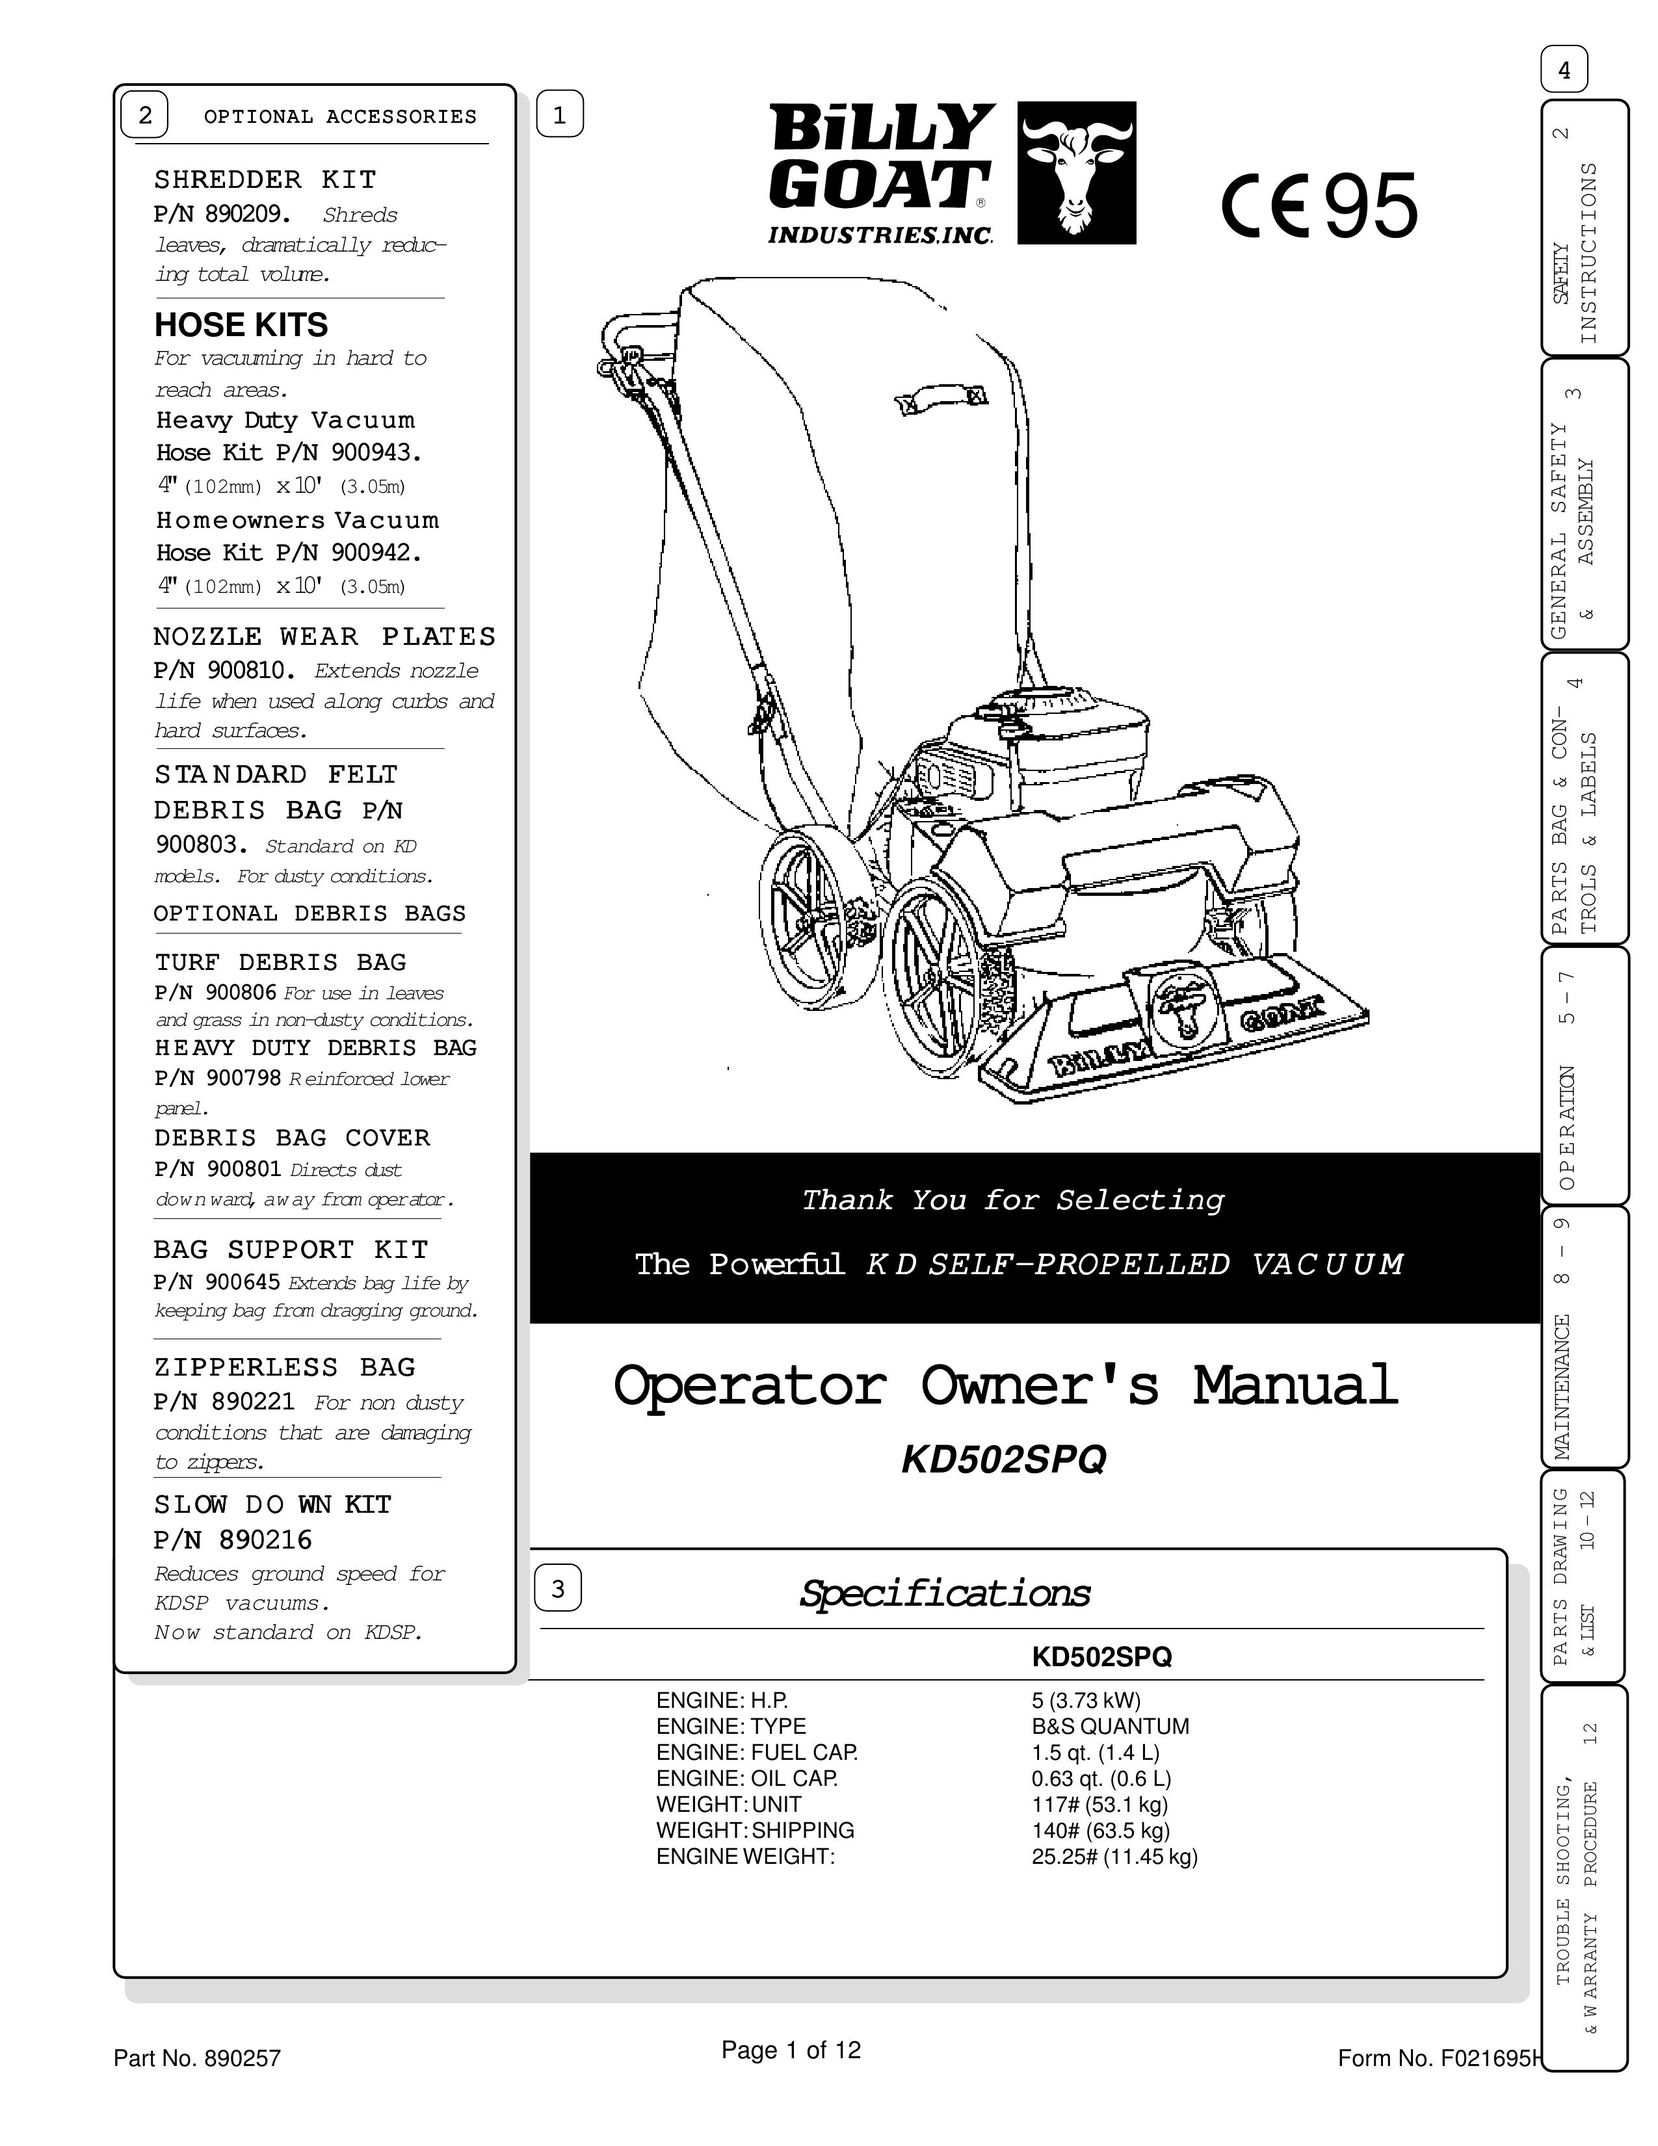 Billy Goat KD502SPQ Vacuum Cleaner User Manual